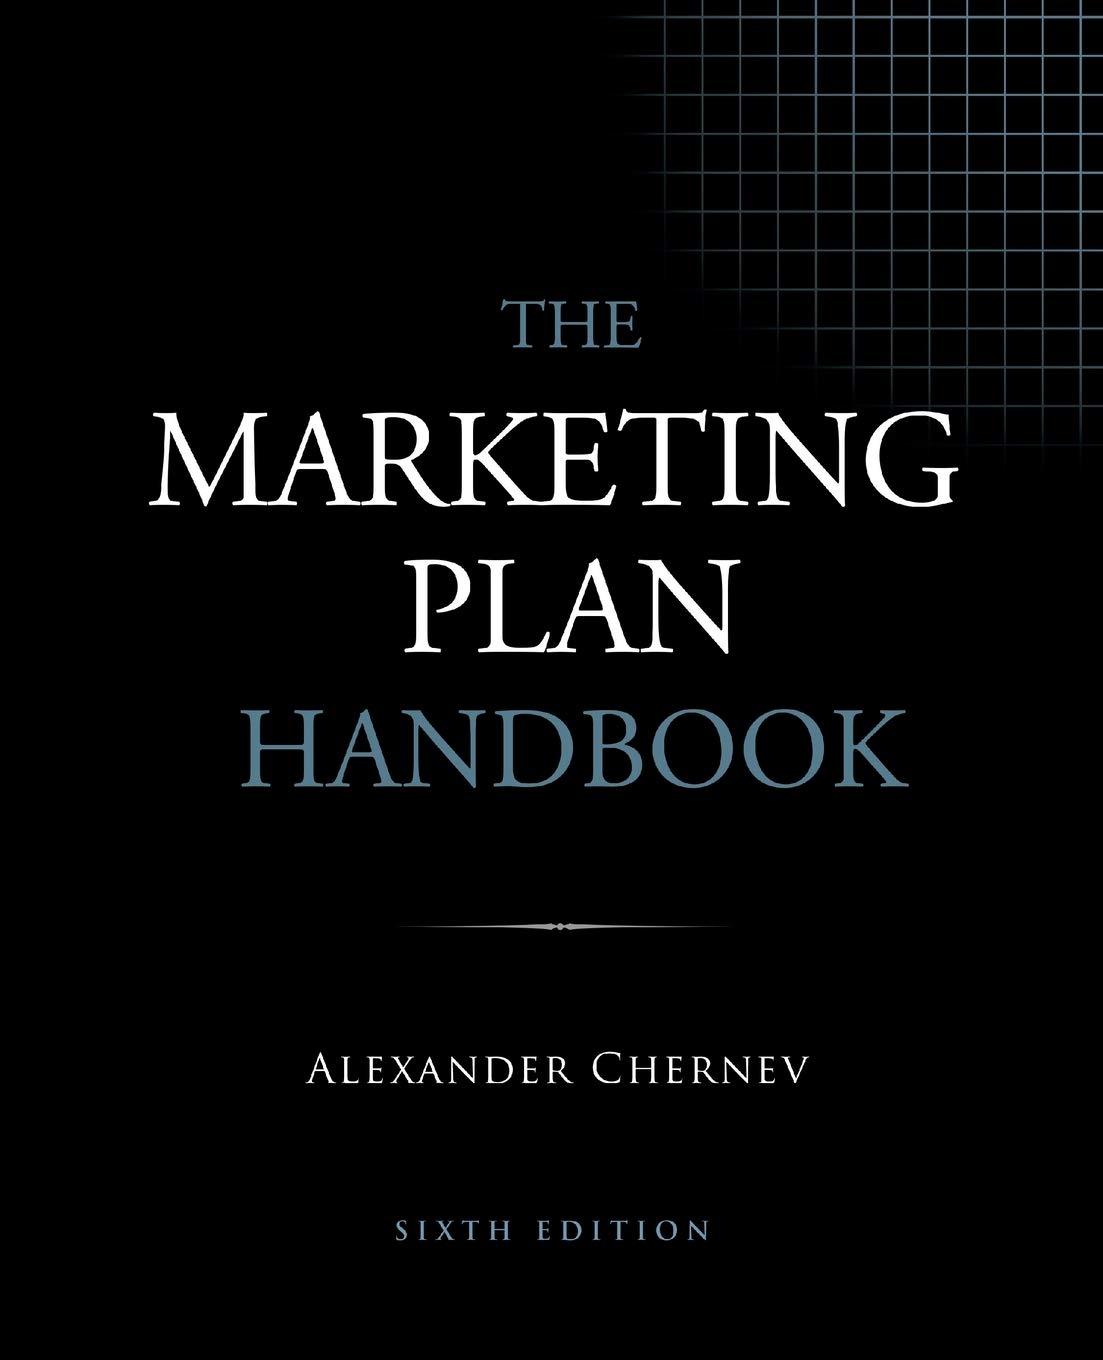 the marketing plan handbook 6th edition alexander chernev 1936572672, 978-1936572670